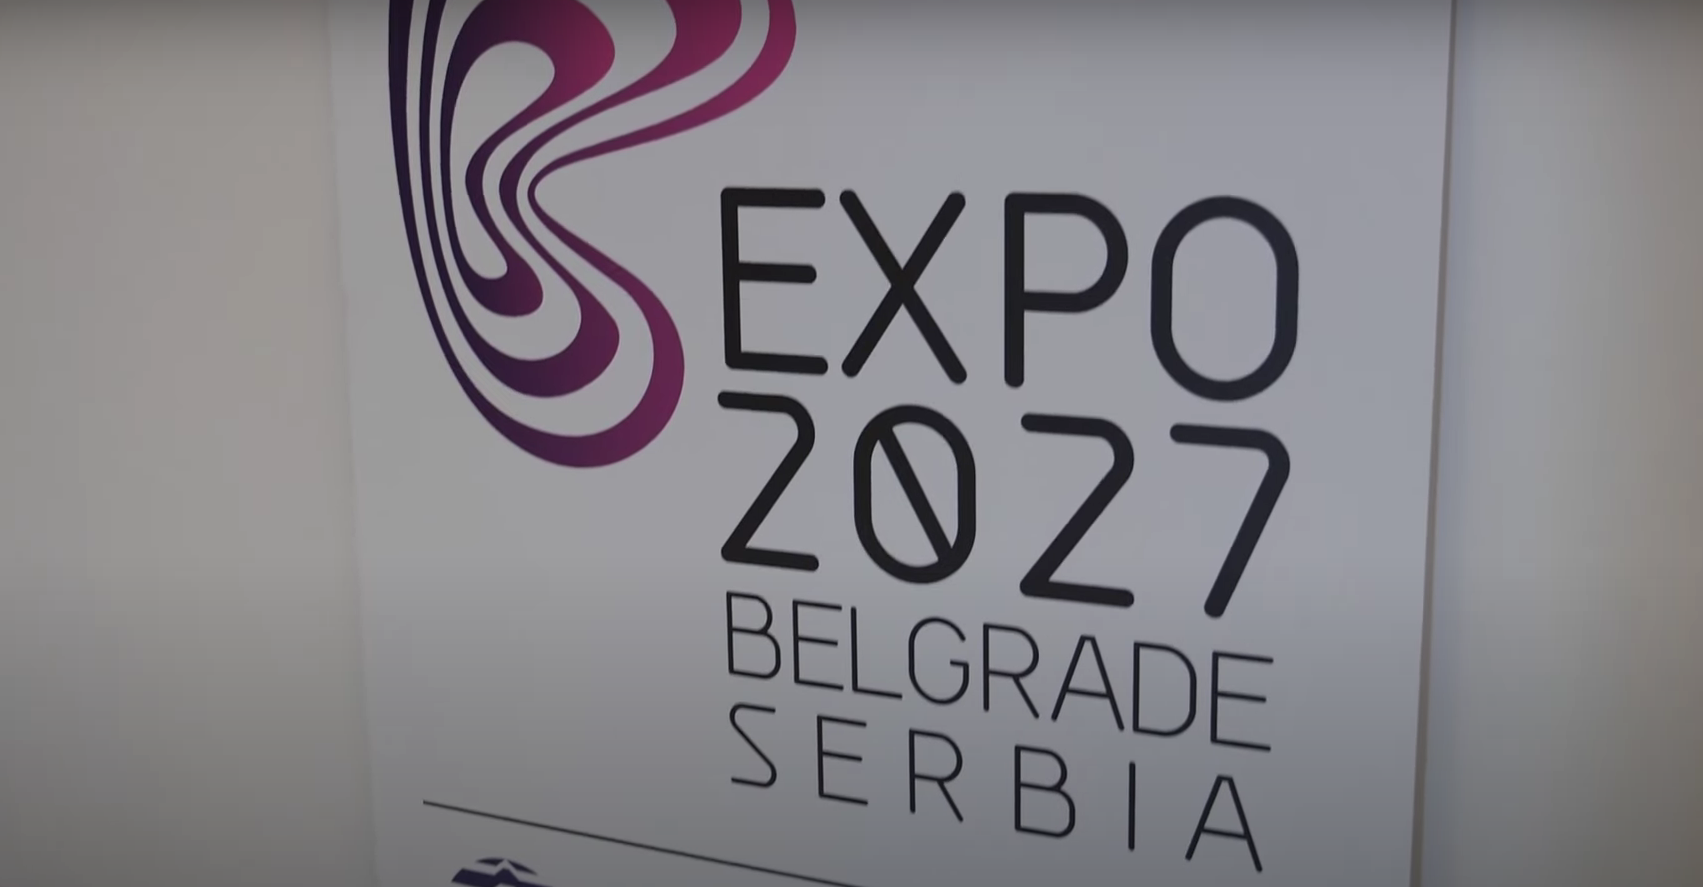 Expo2027 Belgrade